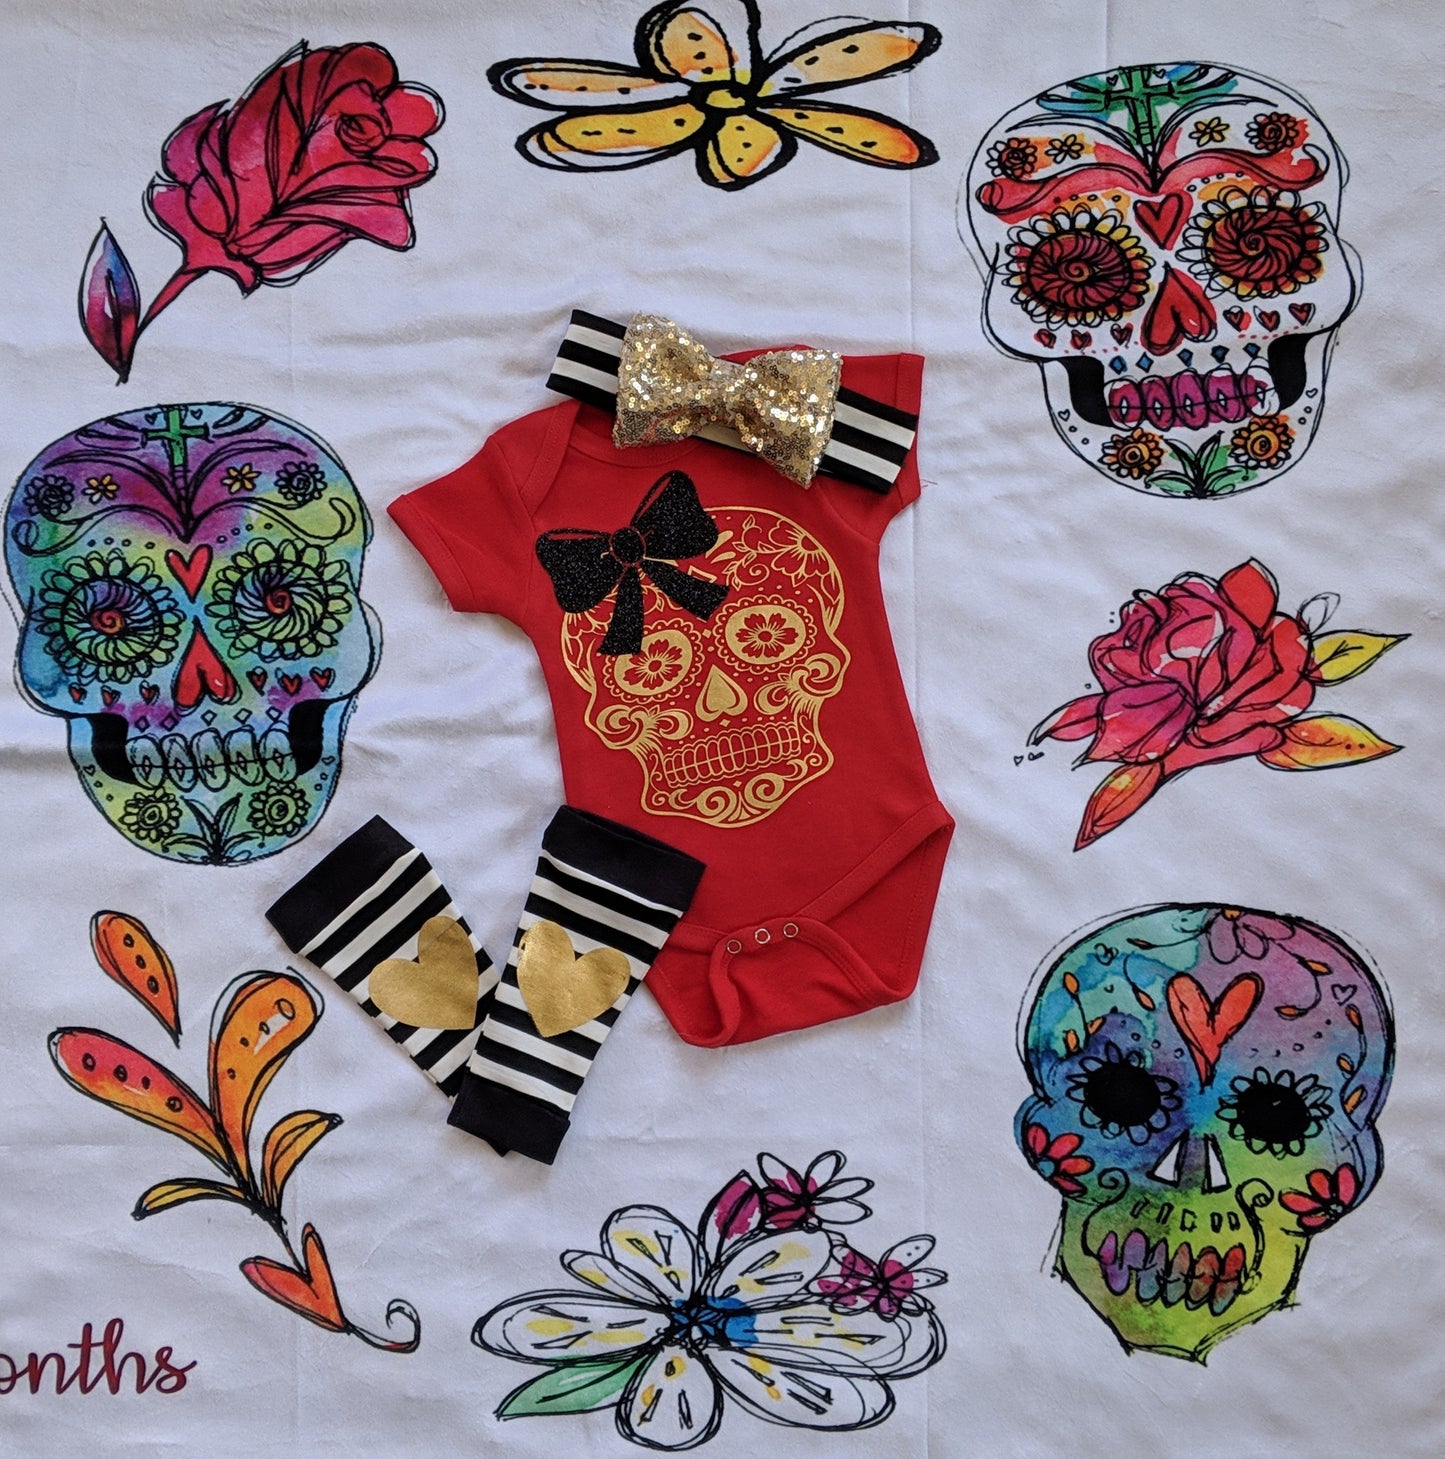 Girls Sugar Skull Outfit,Skull Bodysuit or Tee + Black White Stripe Leg Warmers + Sequin Bow Band,Handmade Goth Baby